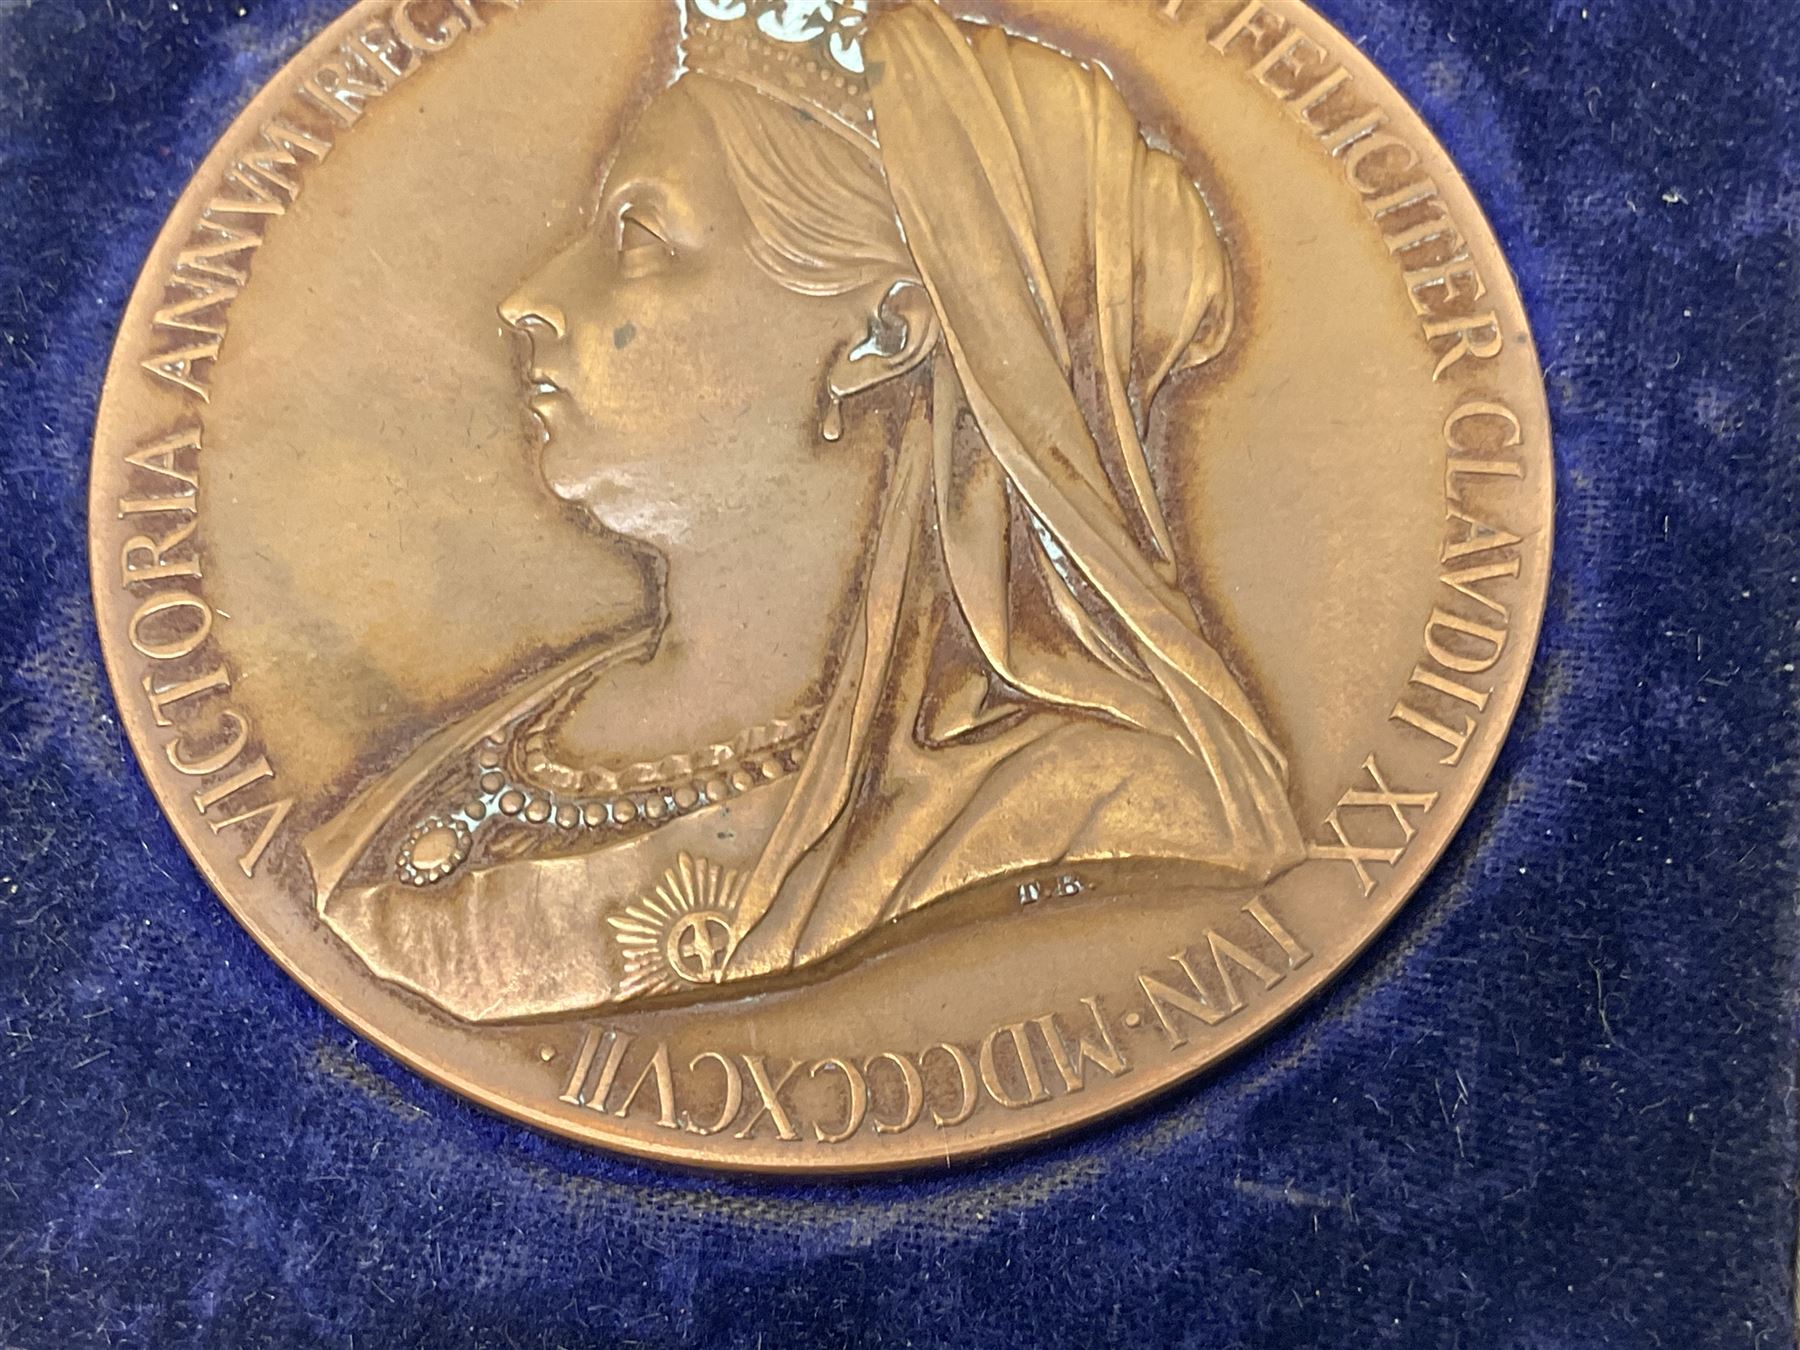 Queen Victoria 1837-1897 commemorative bronze medallion - Image 4 of 6